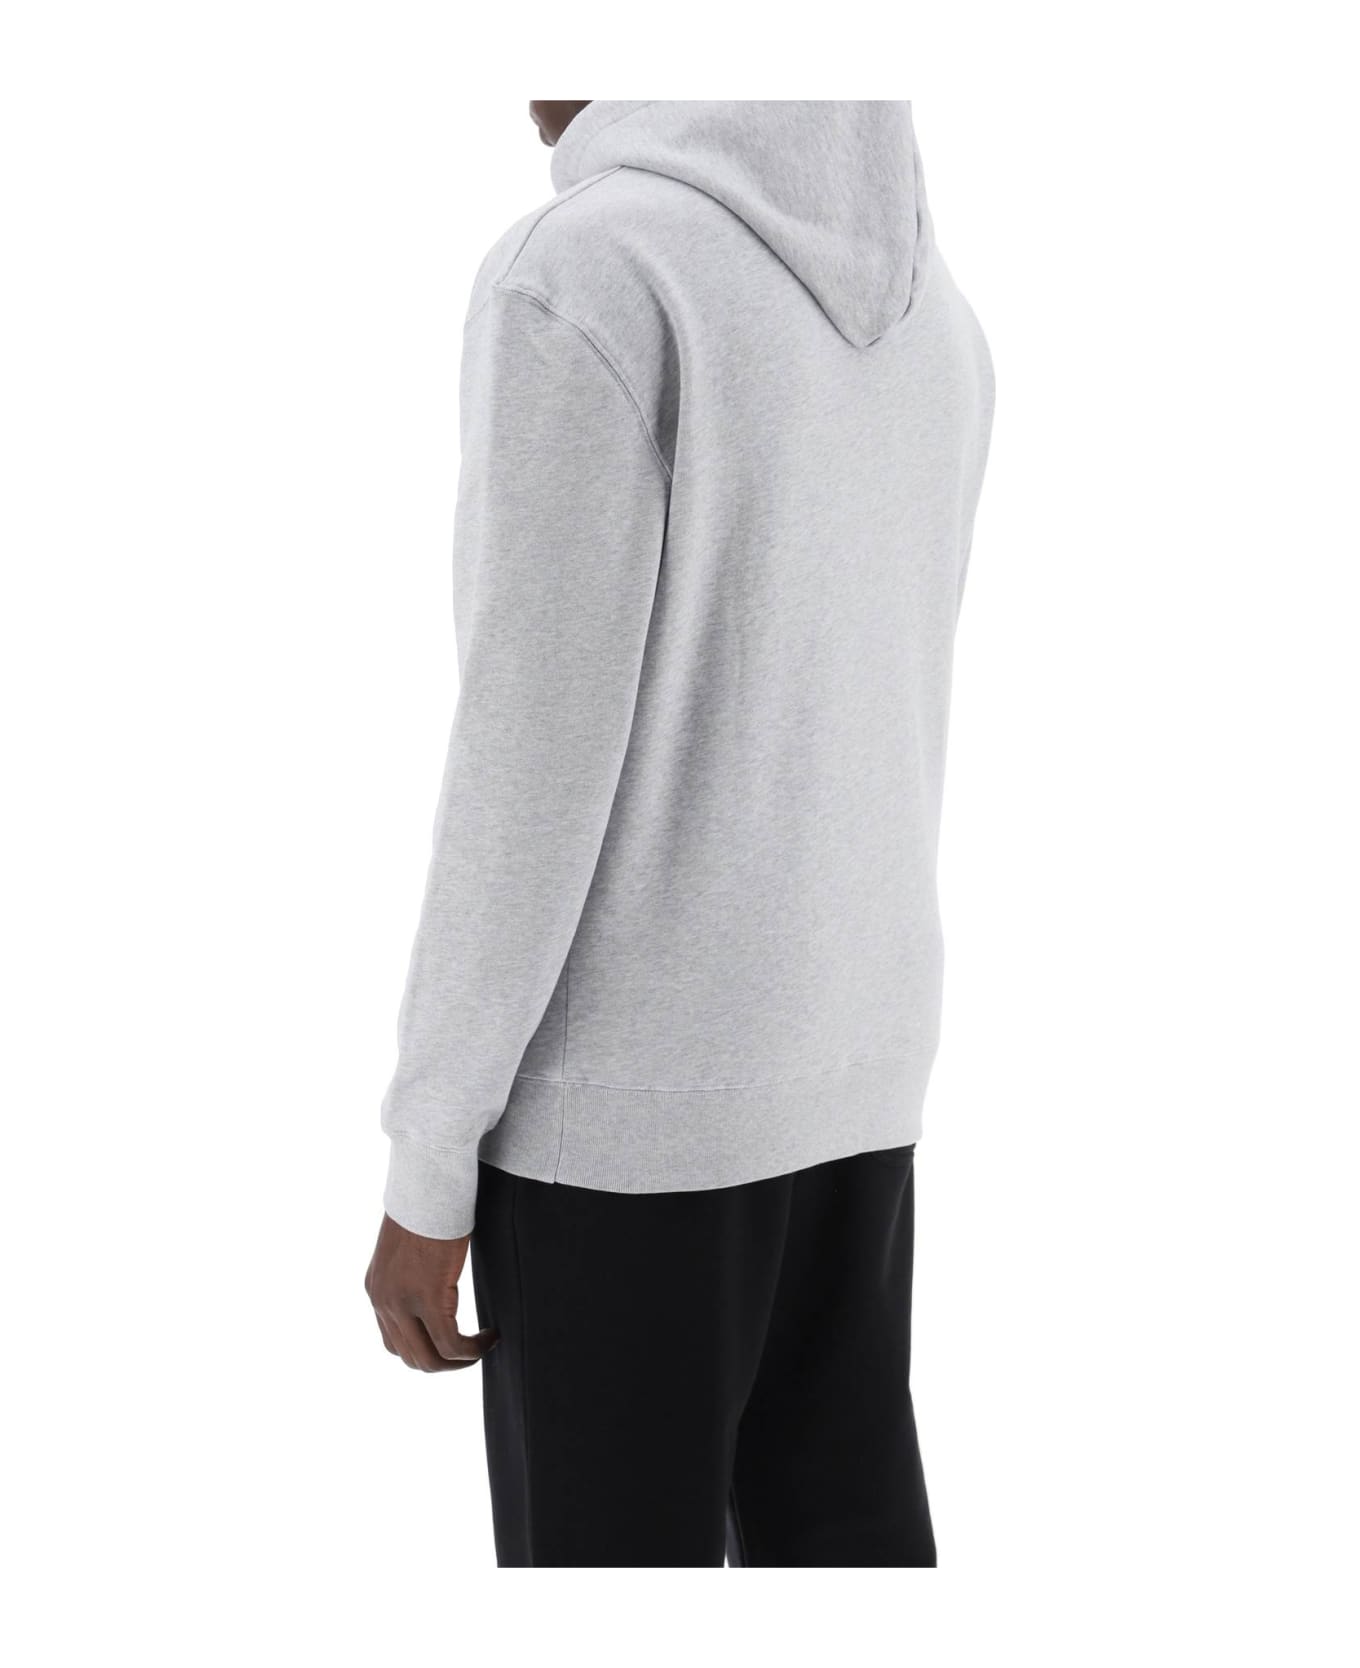 Maison Kitsuné Fox Head Hooded Sweatshirt - LIGHT GREY MELANGE (Grey)